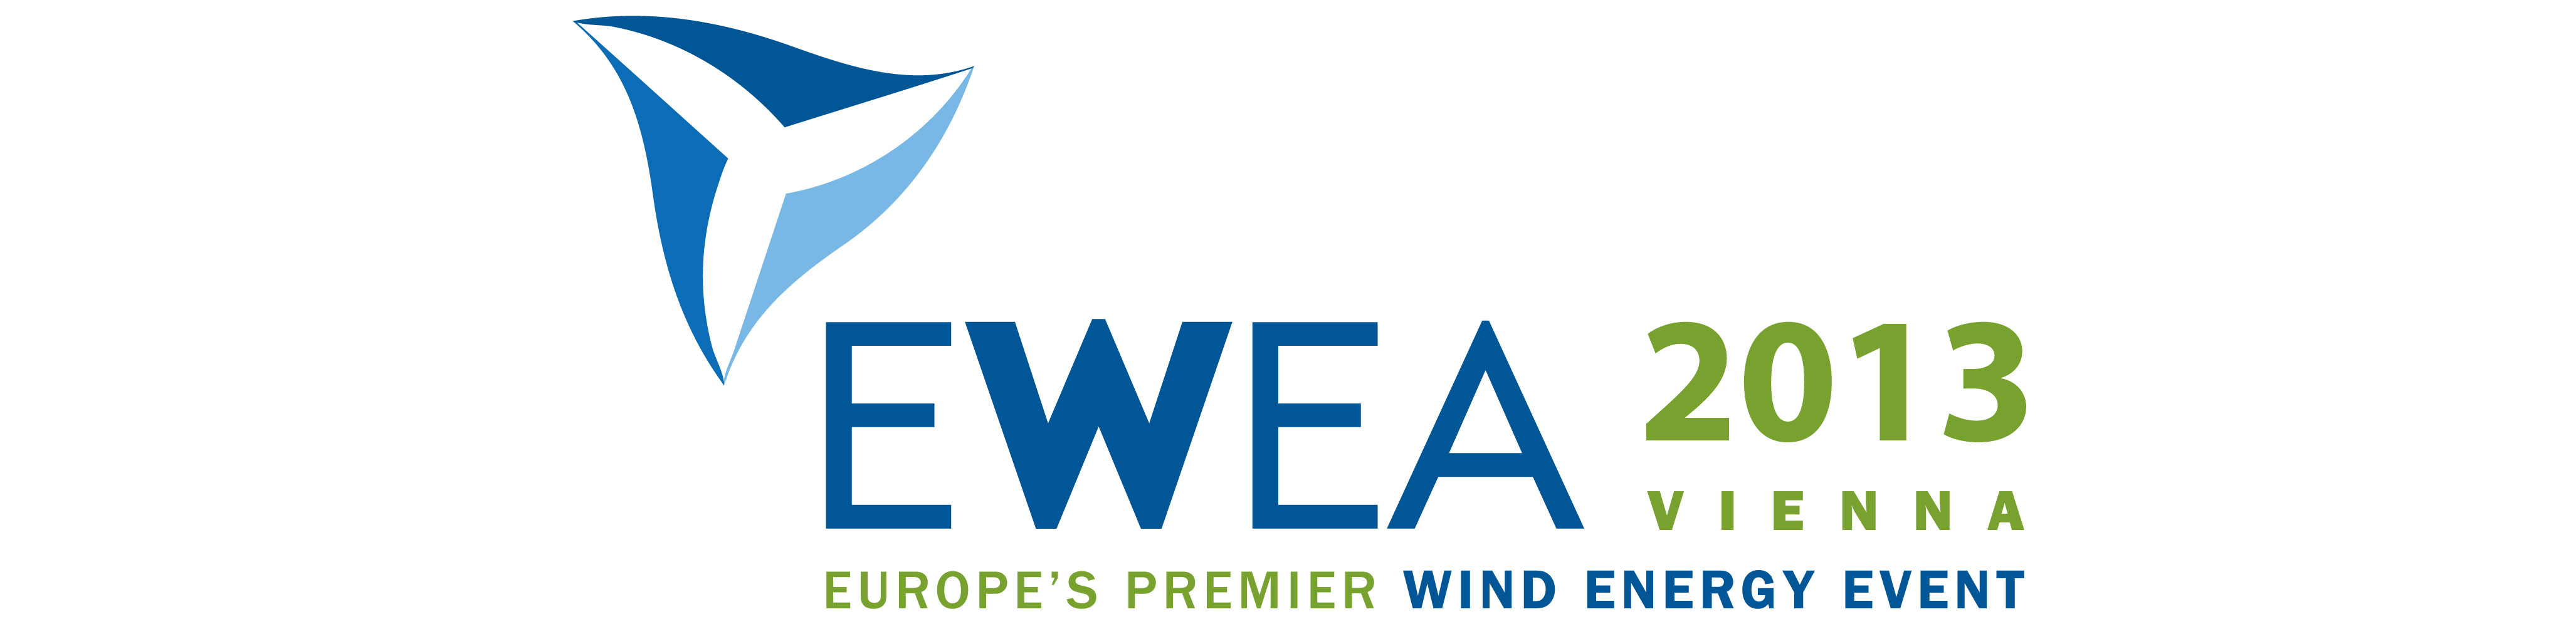 EWEA, February 2013 - Wien, Austria